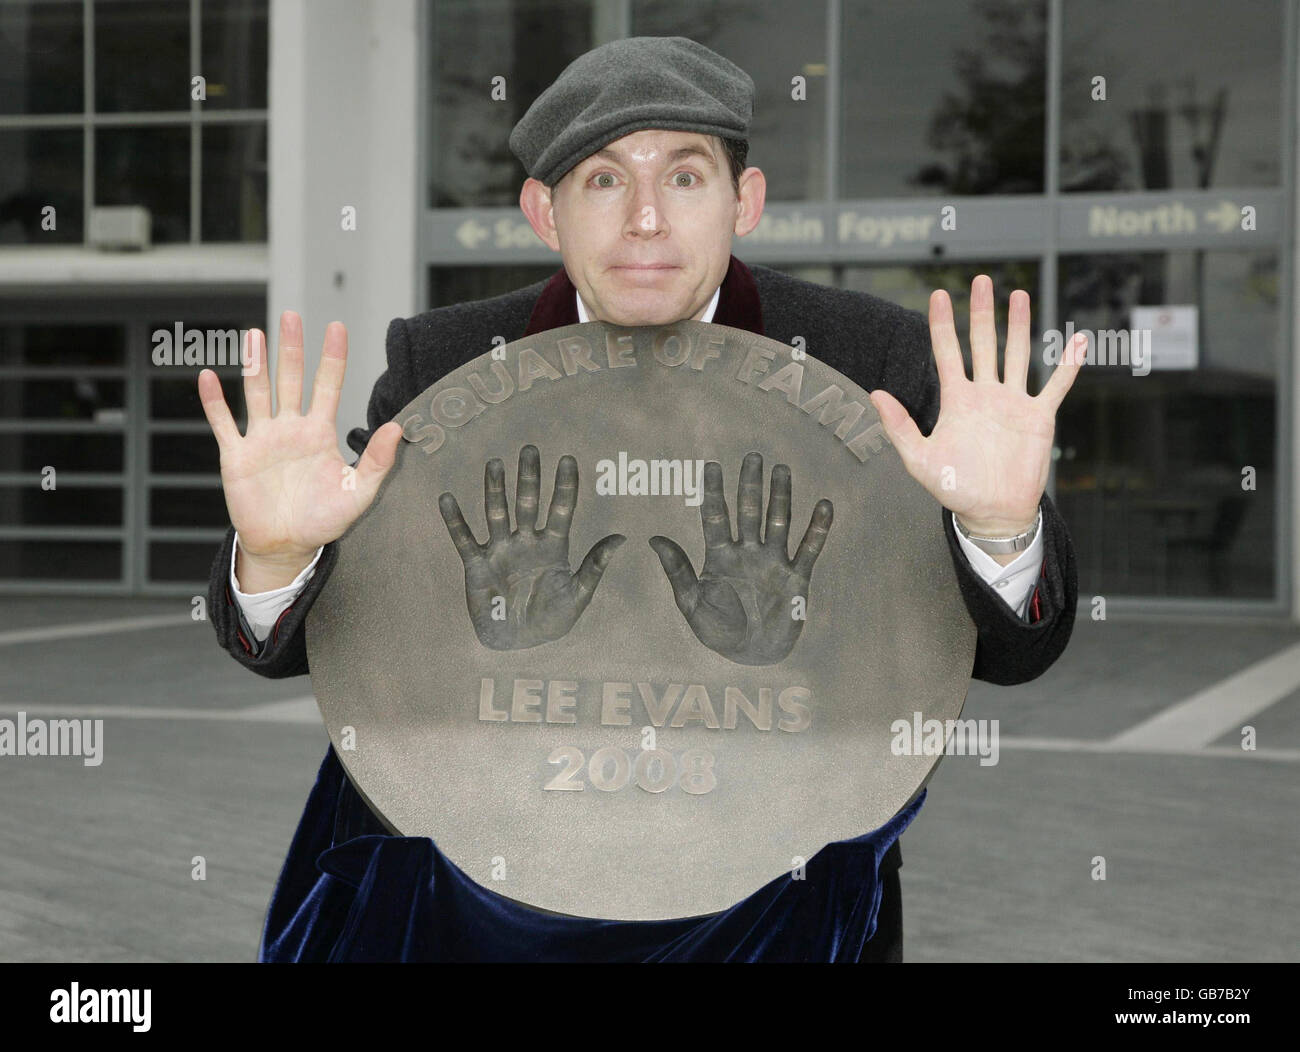 Komiker Lee Evans bei der Enthüllung seiner Square of Fame-Handprints auf dem Wembley Square im Norden Londons. Stockfoto